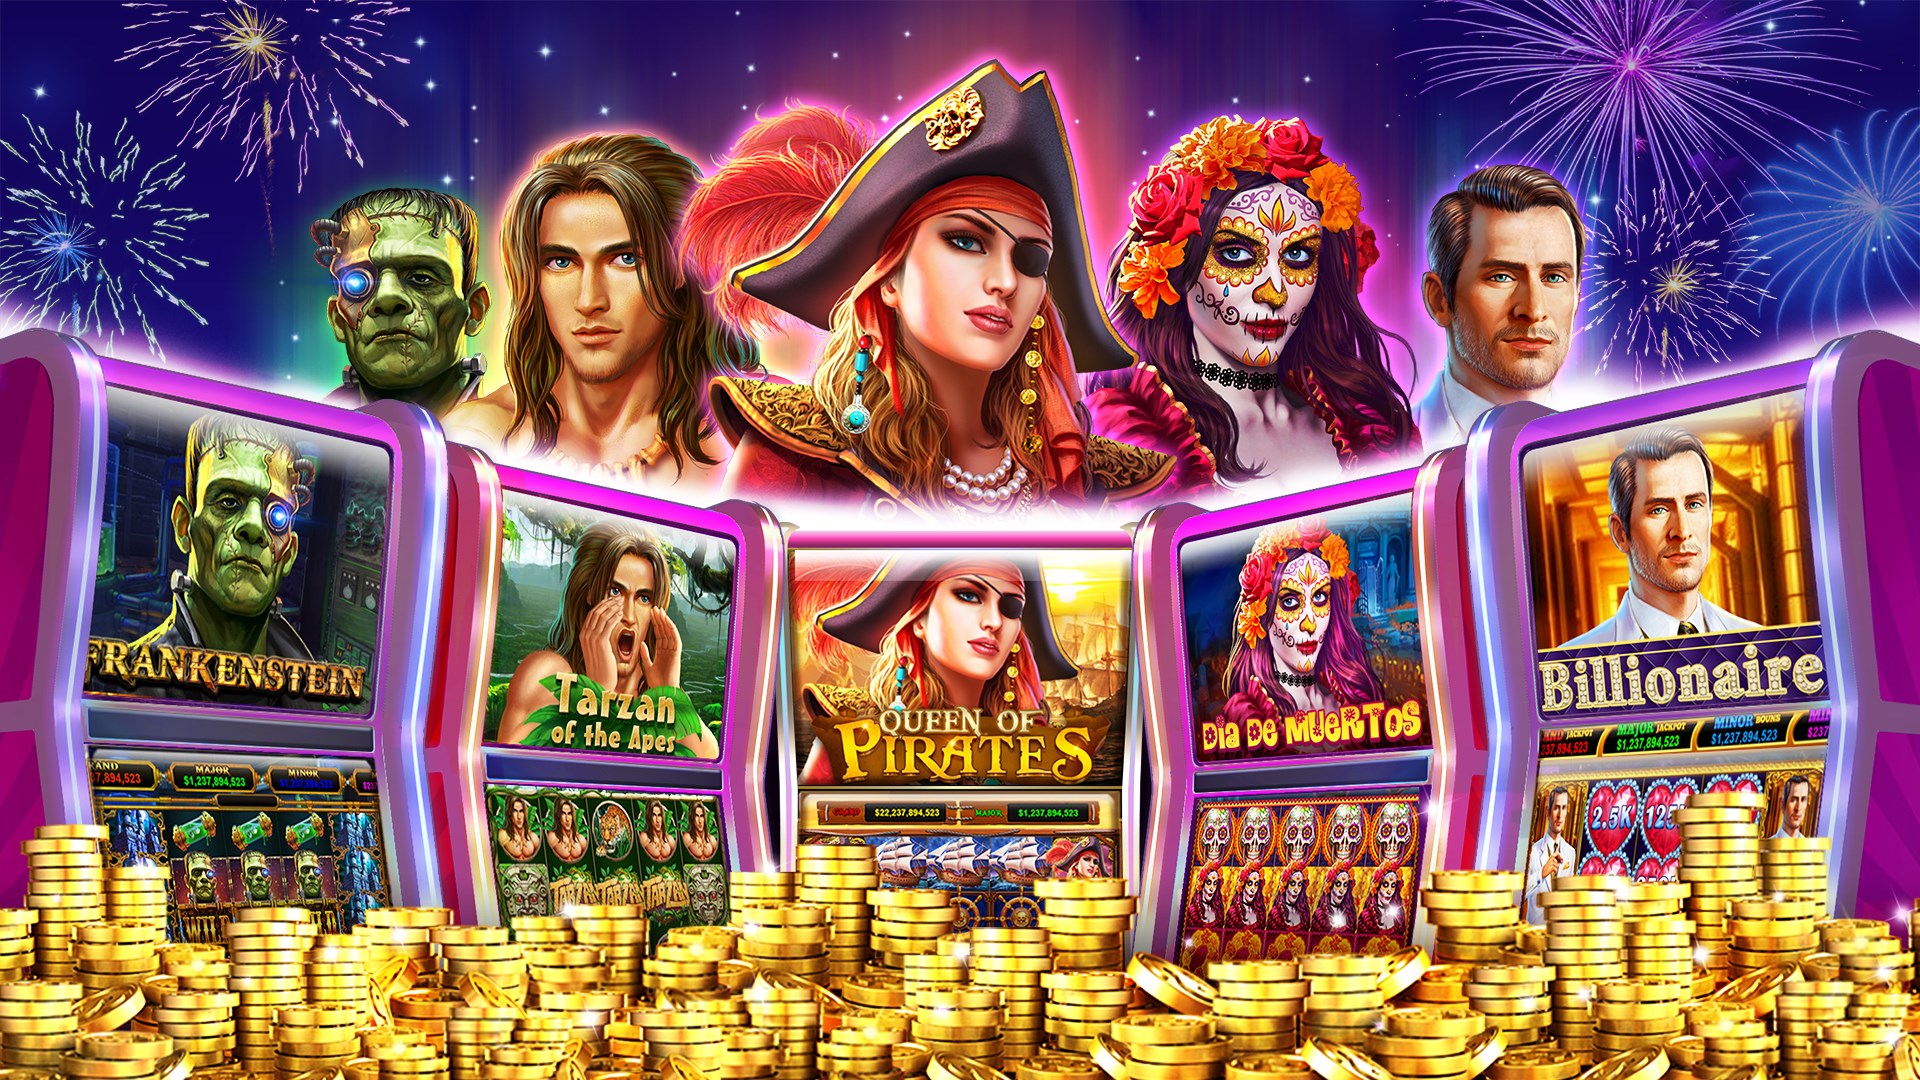 Get Slotsmash - Casino Slots Game - Microsoft Store